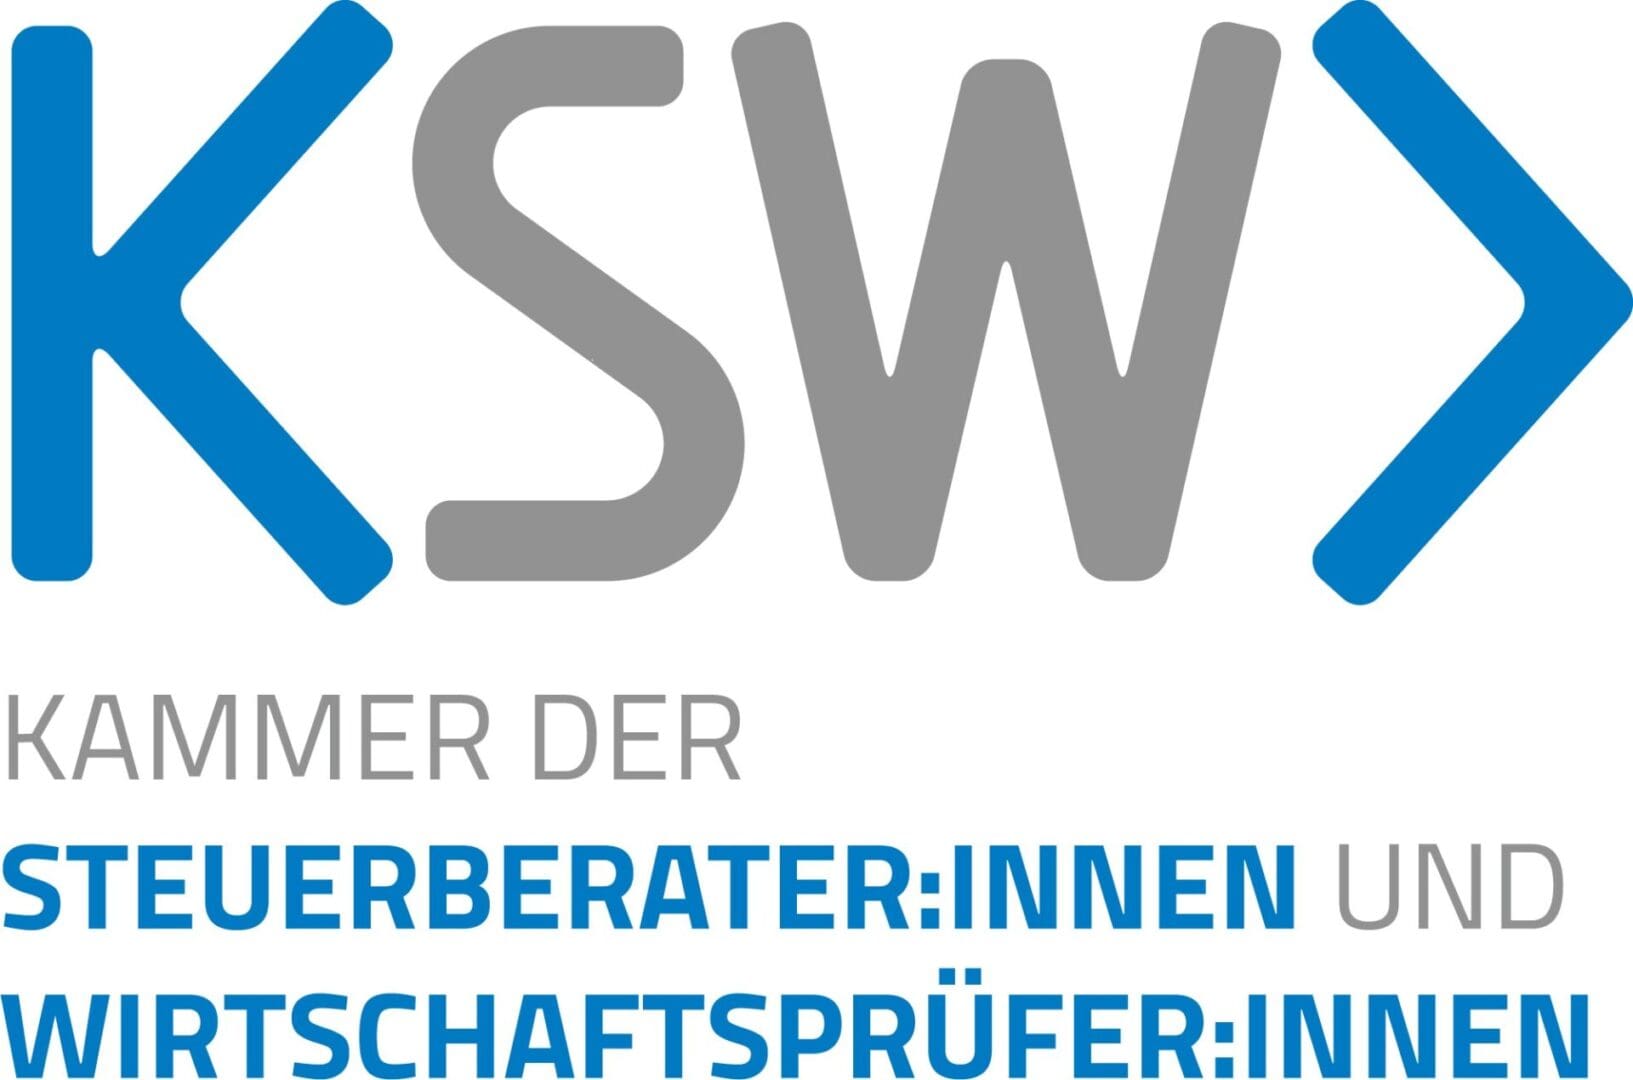 KSW logo Austria